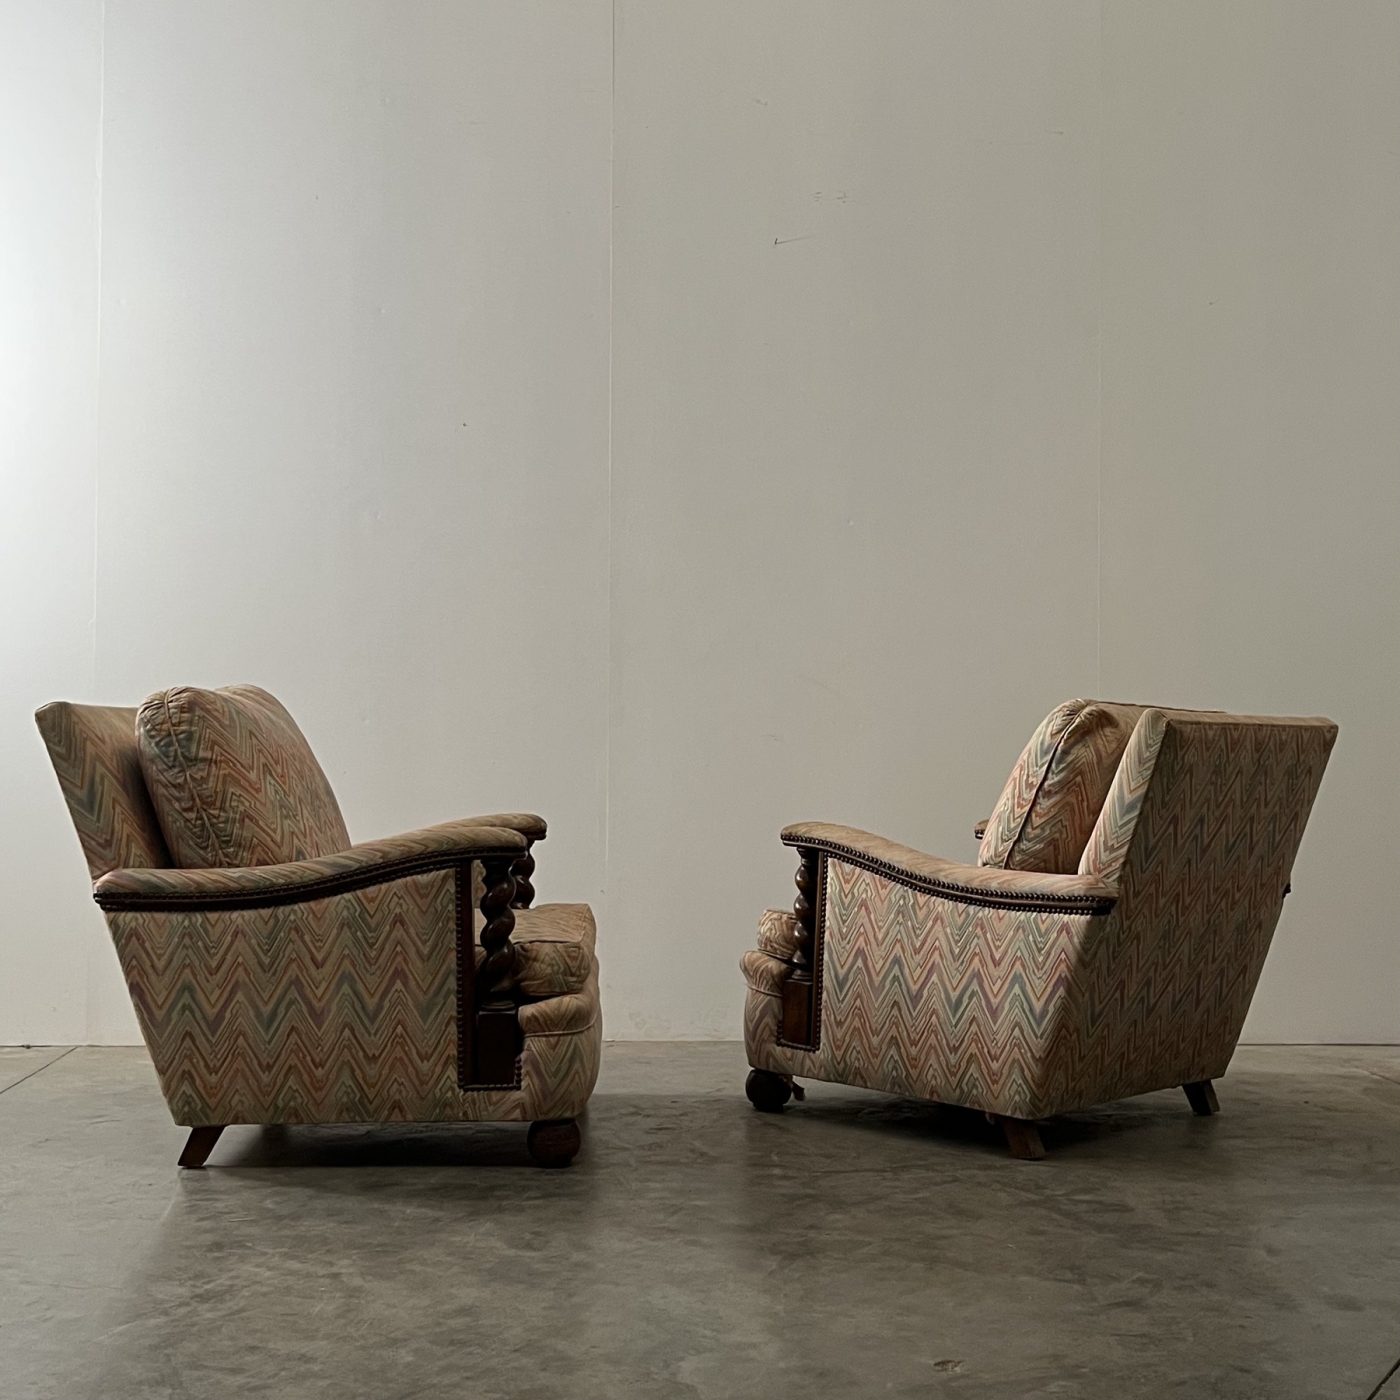 objet-vagabond-armchairs0002